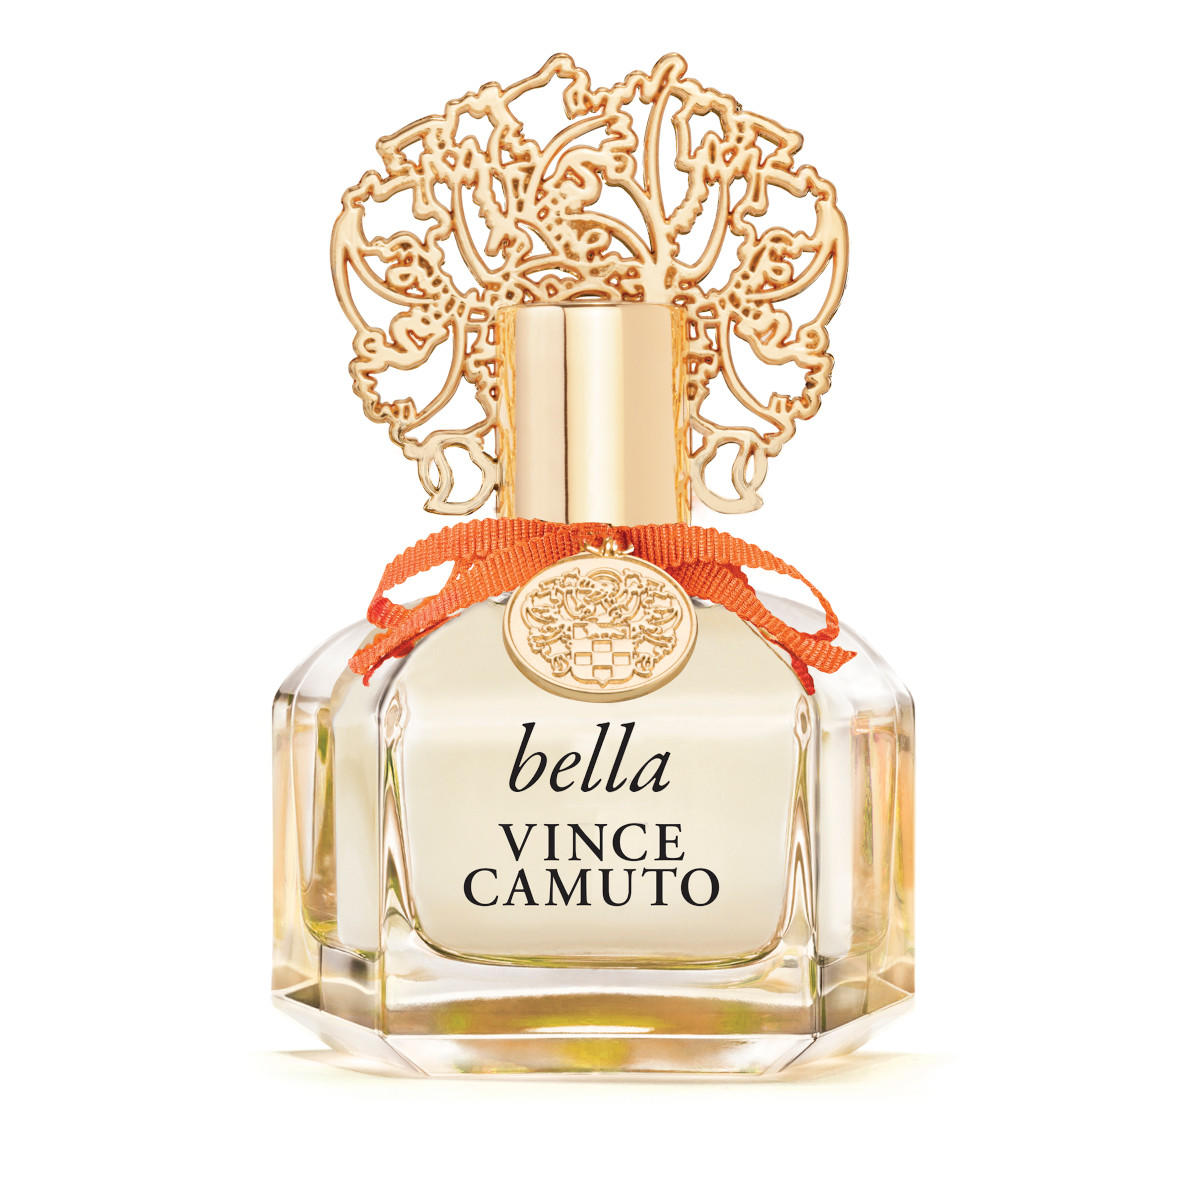 Vince Camuto Bella Perfume Travel